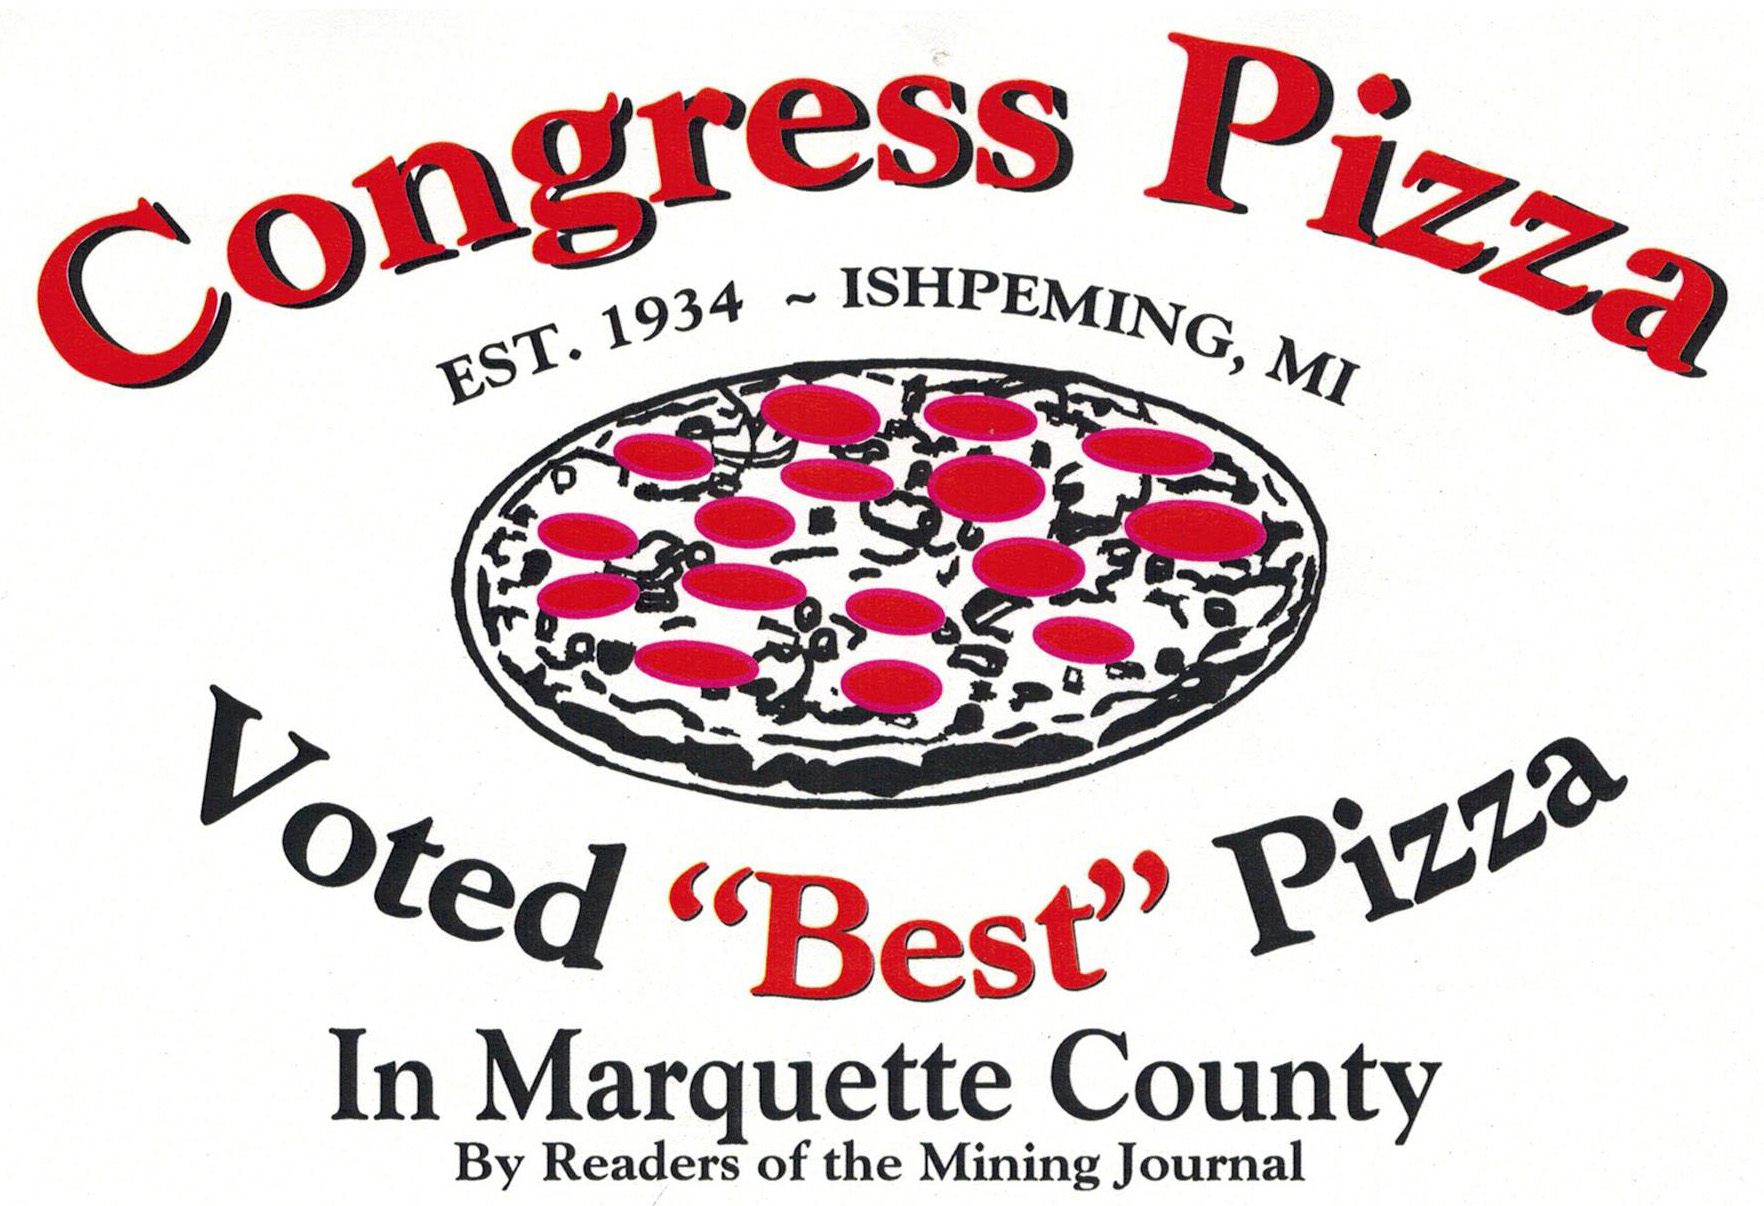 Congress Pizza